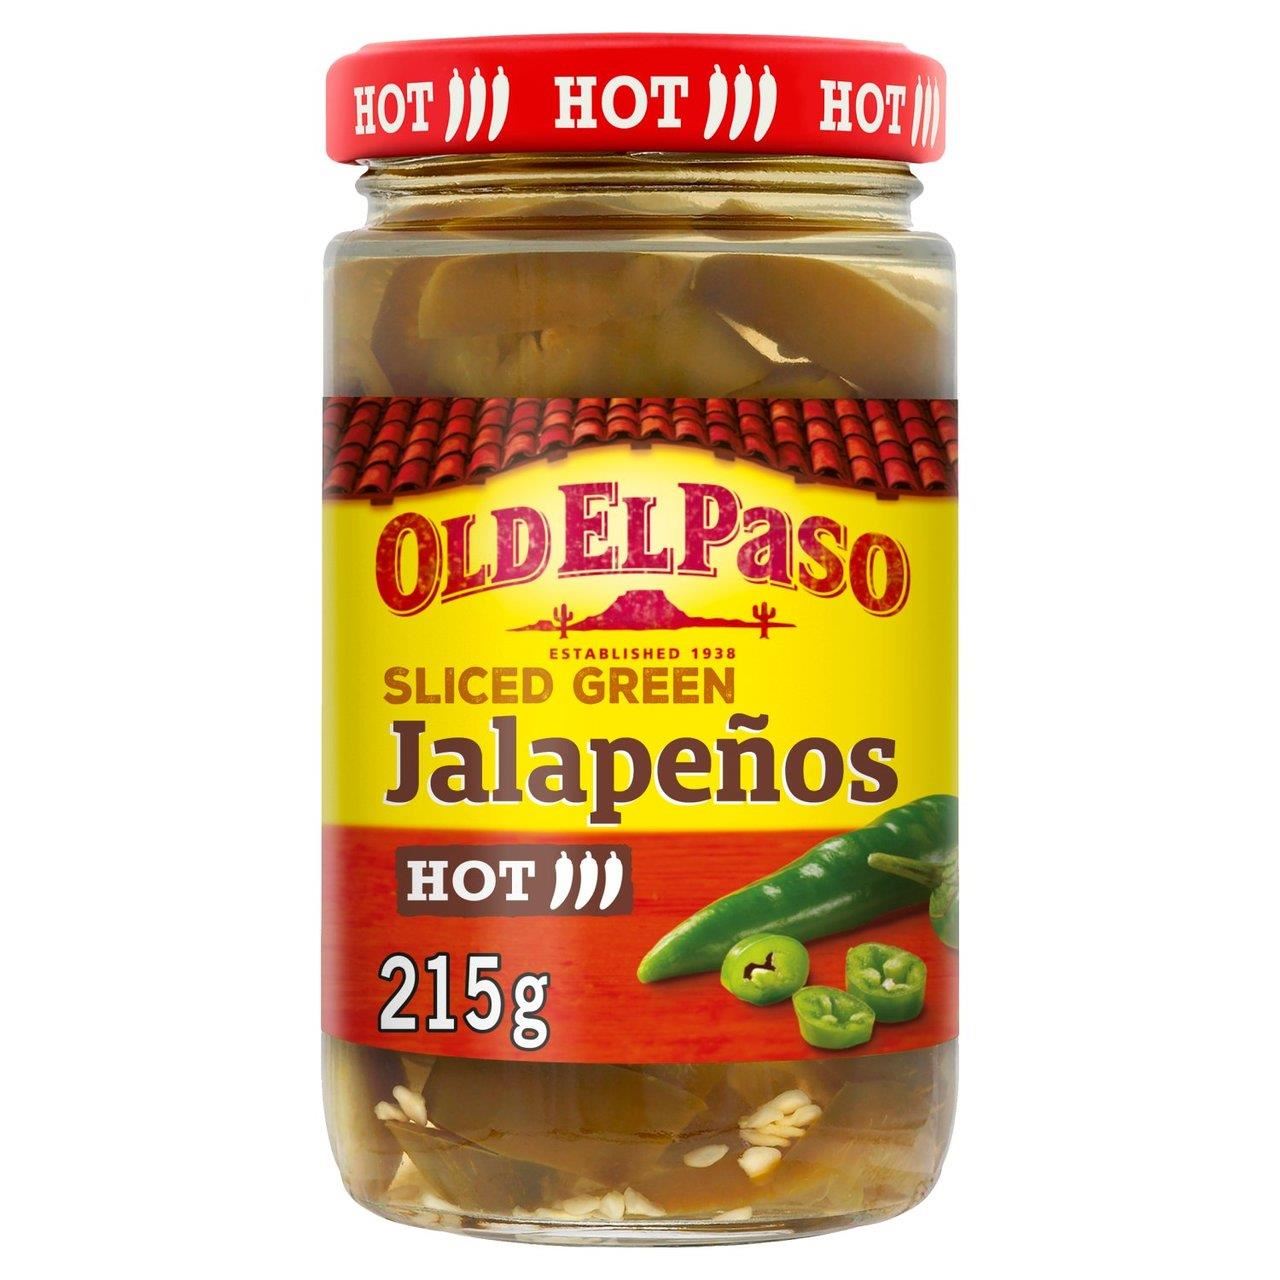 Old El Paso Hot Sliced Green Jalapenos Jar 215g